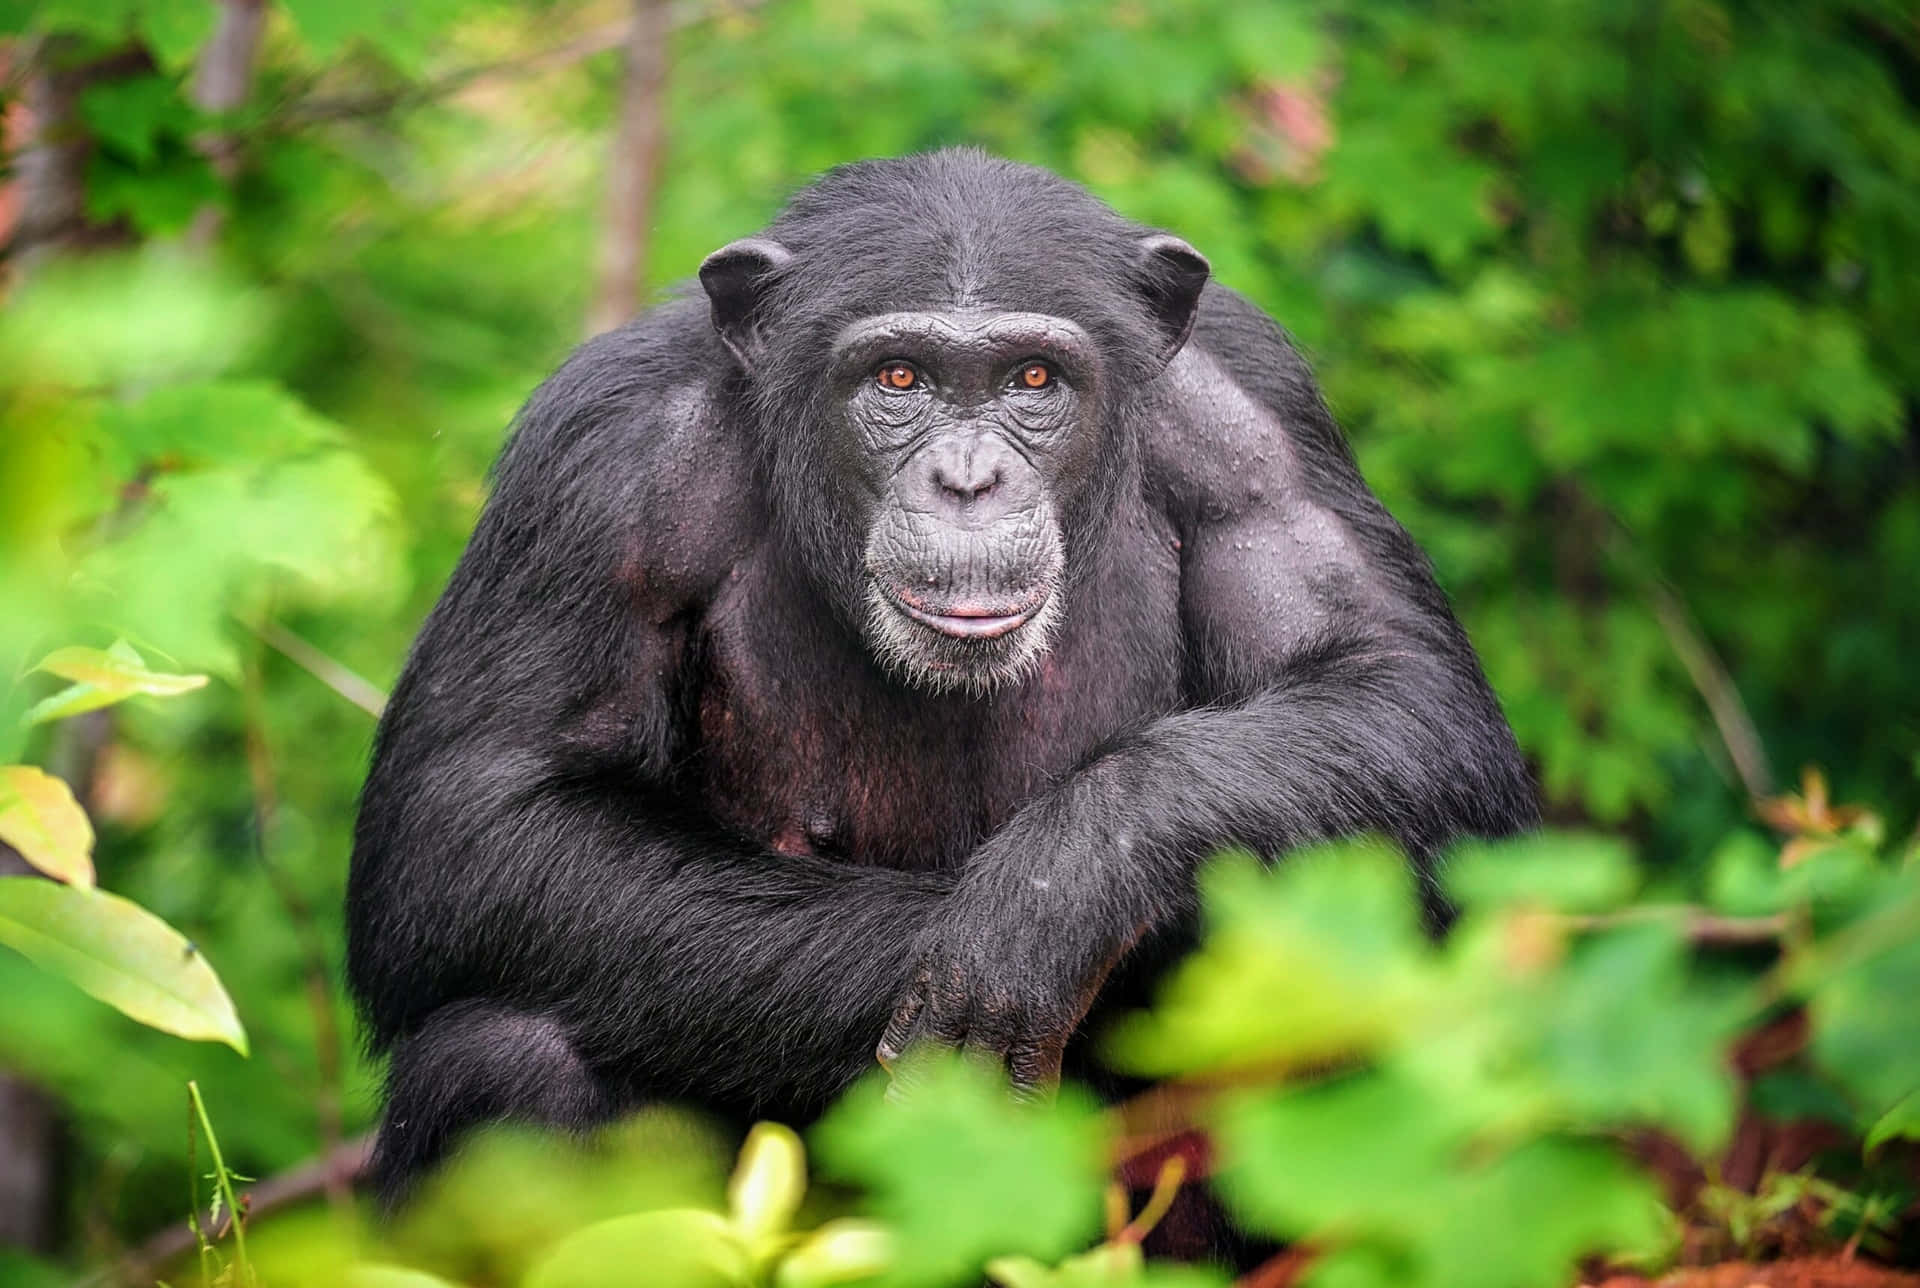 An adorable chimpanzee running in its natural habitat